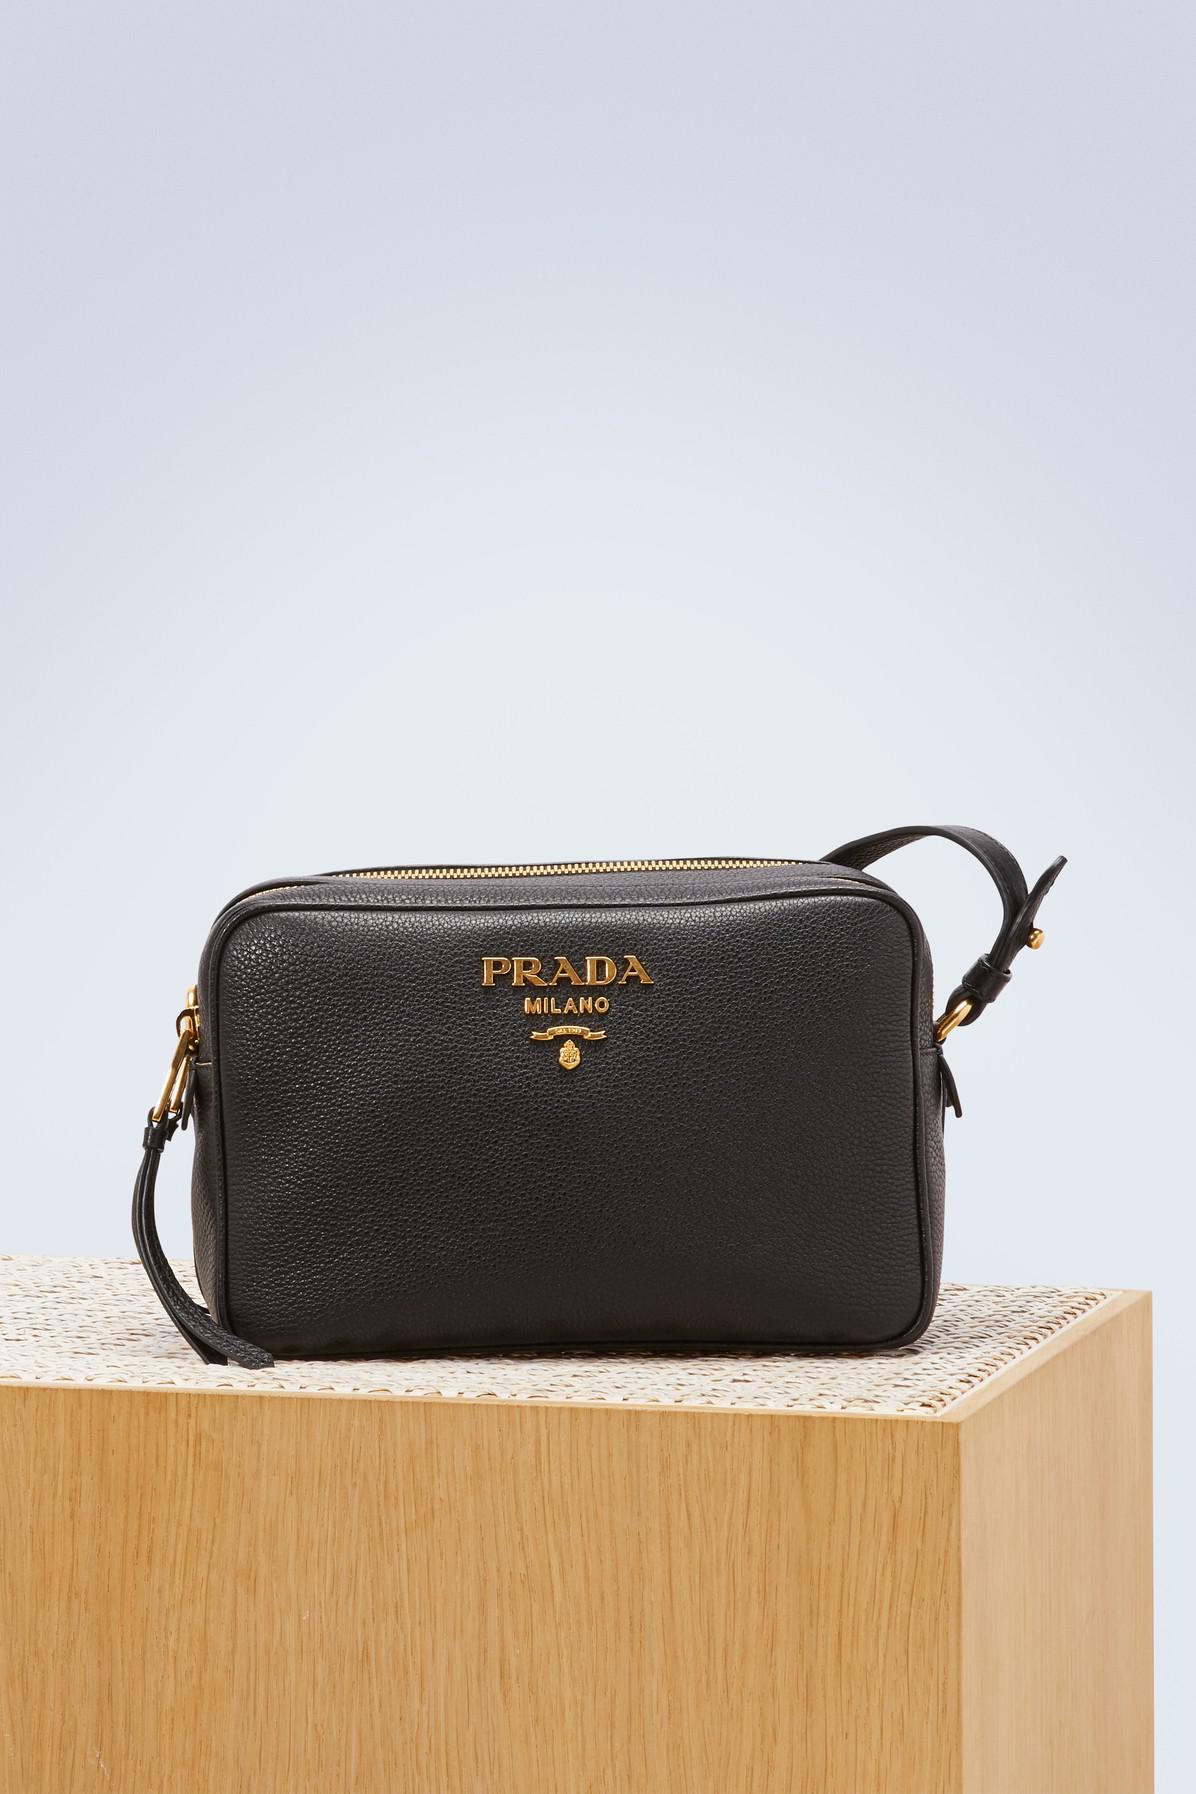 prada camera bag leather